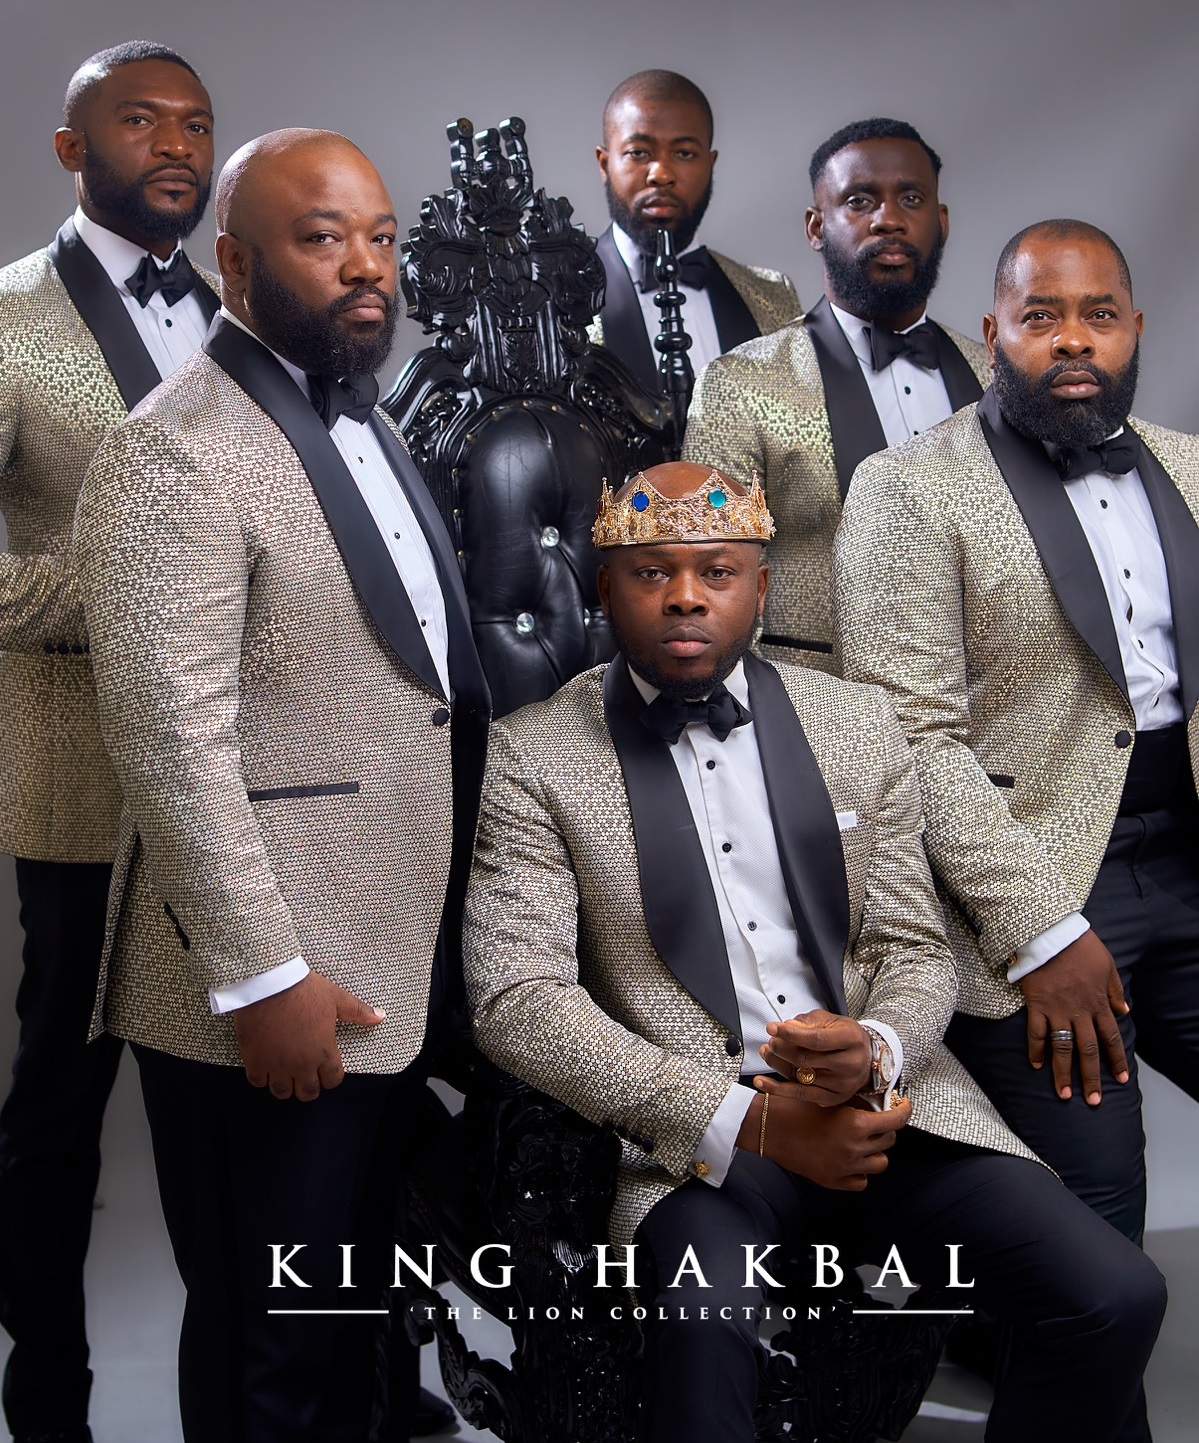 Men's Bespoke Suits Designer - King Hakbal International